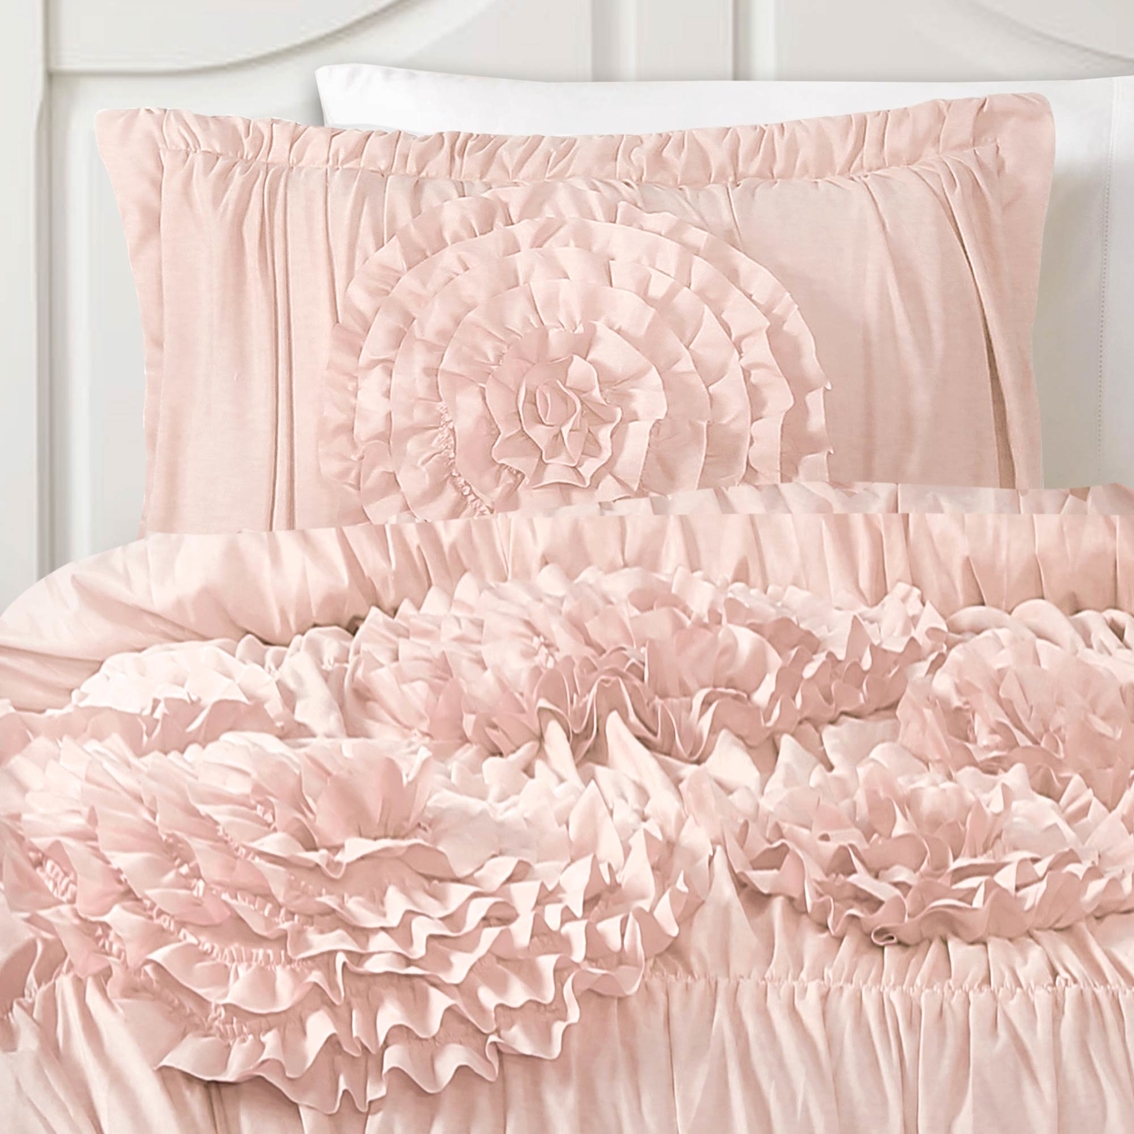 Lush Decor Serena Comforter Set - Image 4 of 4